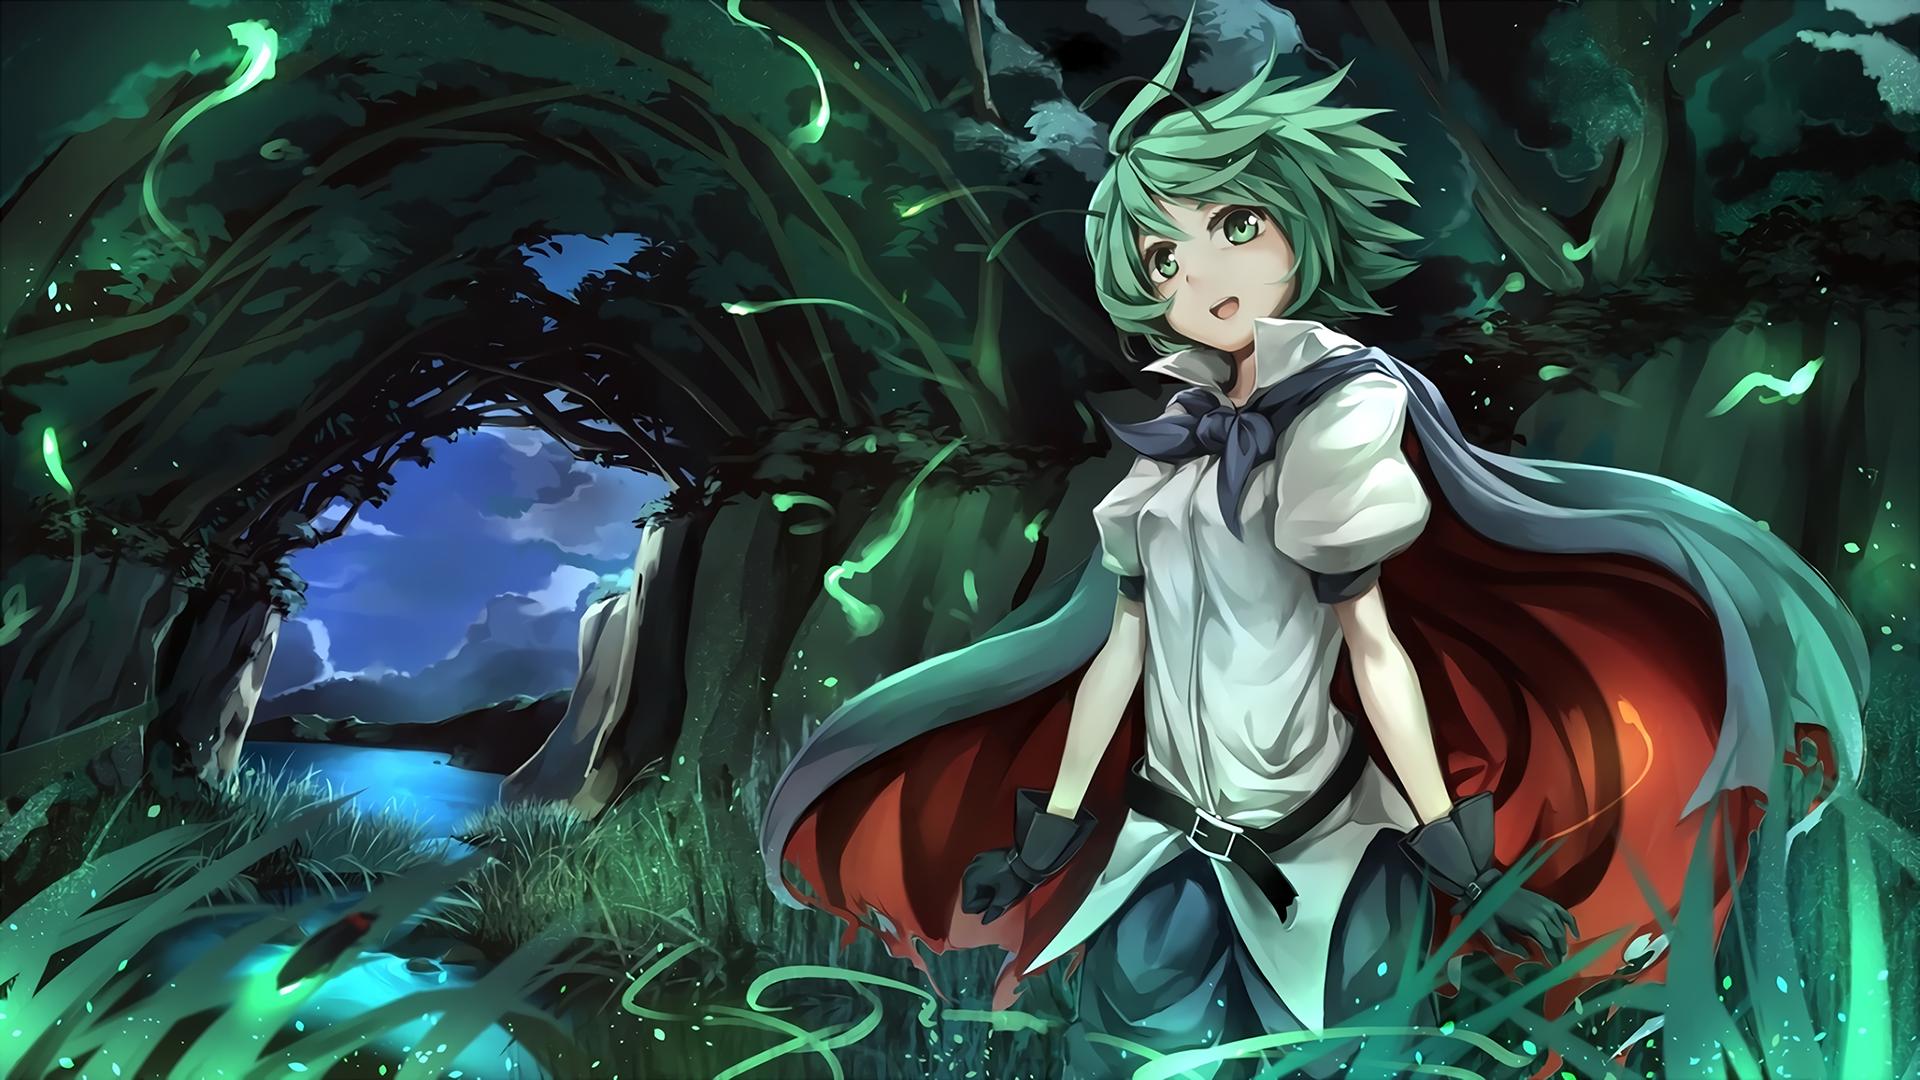 green anime wallpaper,cg artwork,illustration,fictional character,anime,adventure game